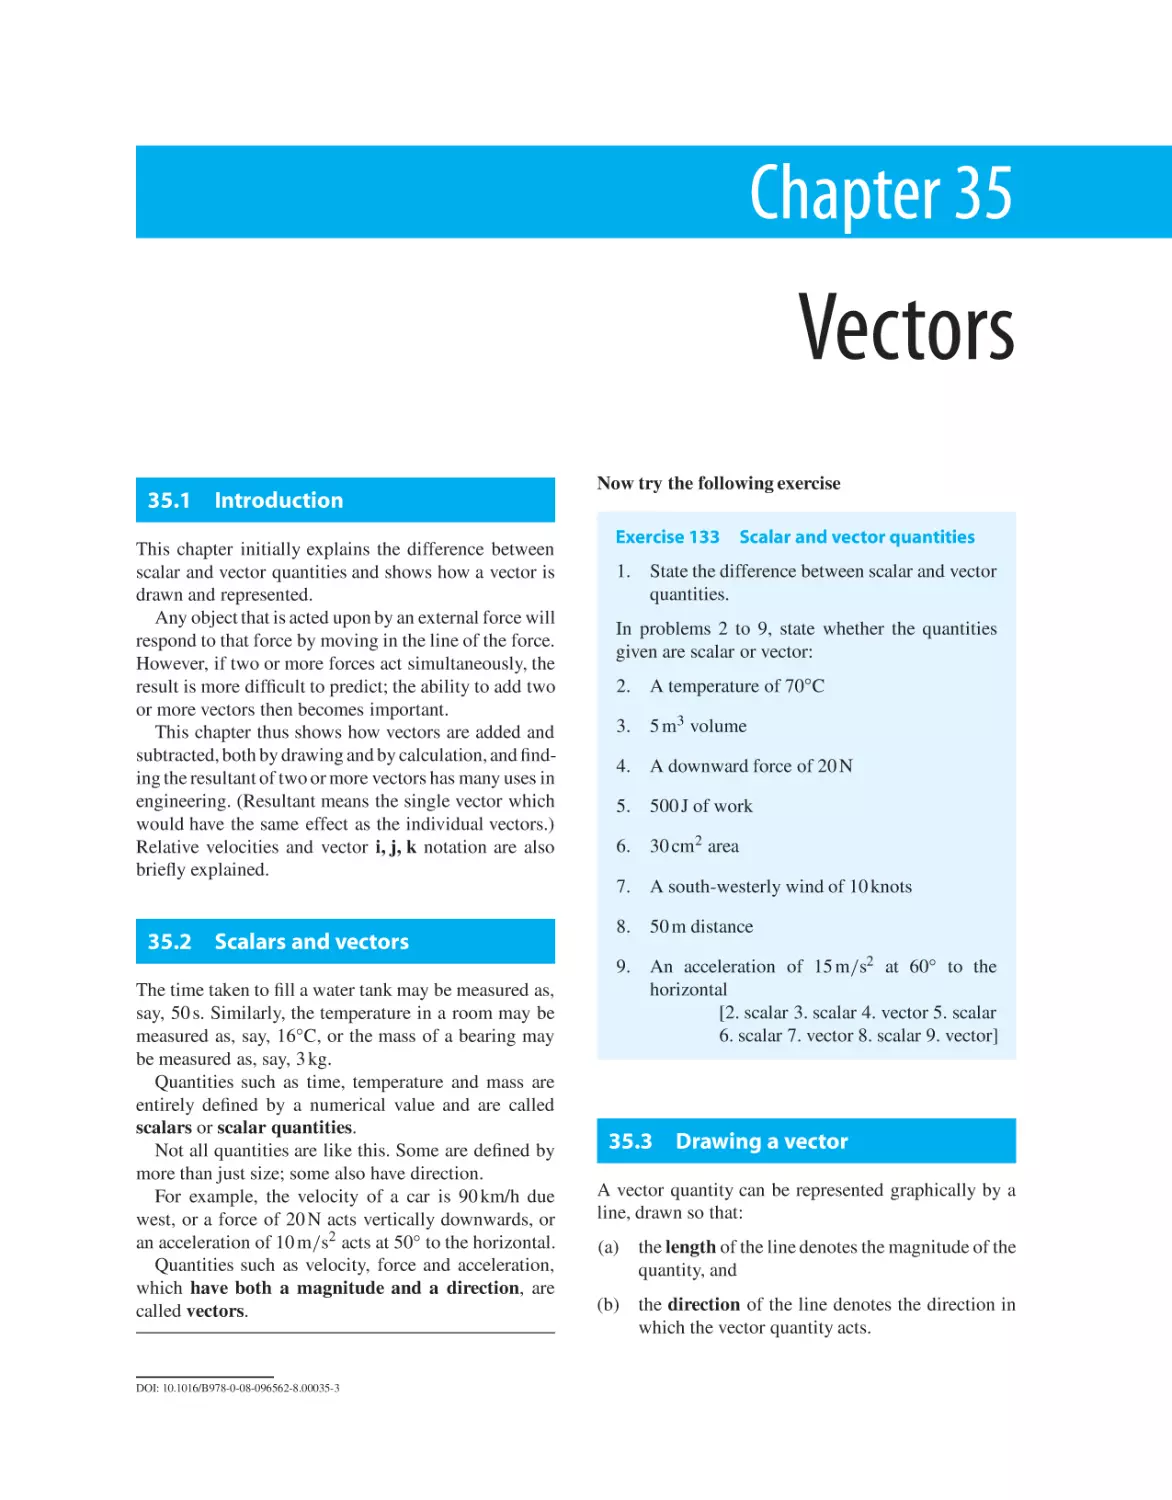 Chapter 35. Vectors
35.1 Introduction
35.2 Scalars and vectors
35.3 Drawing a vector